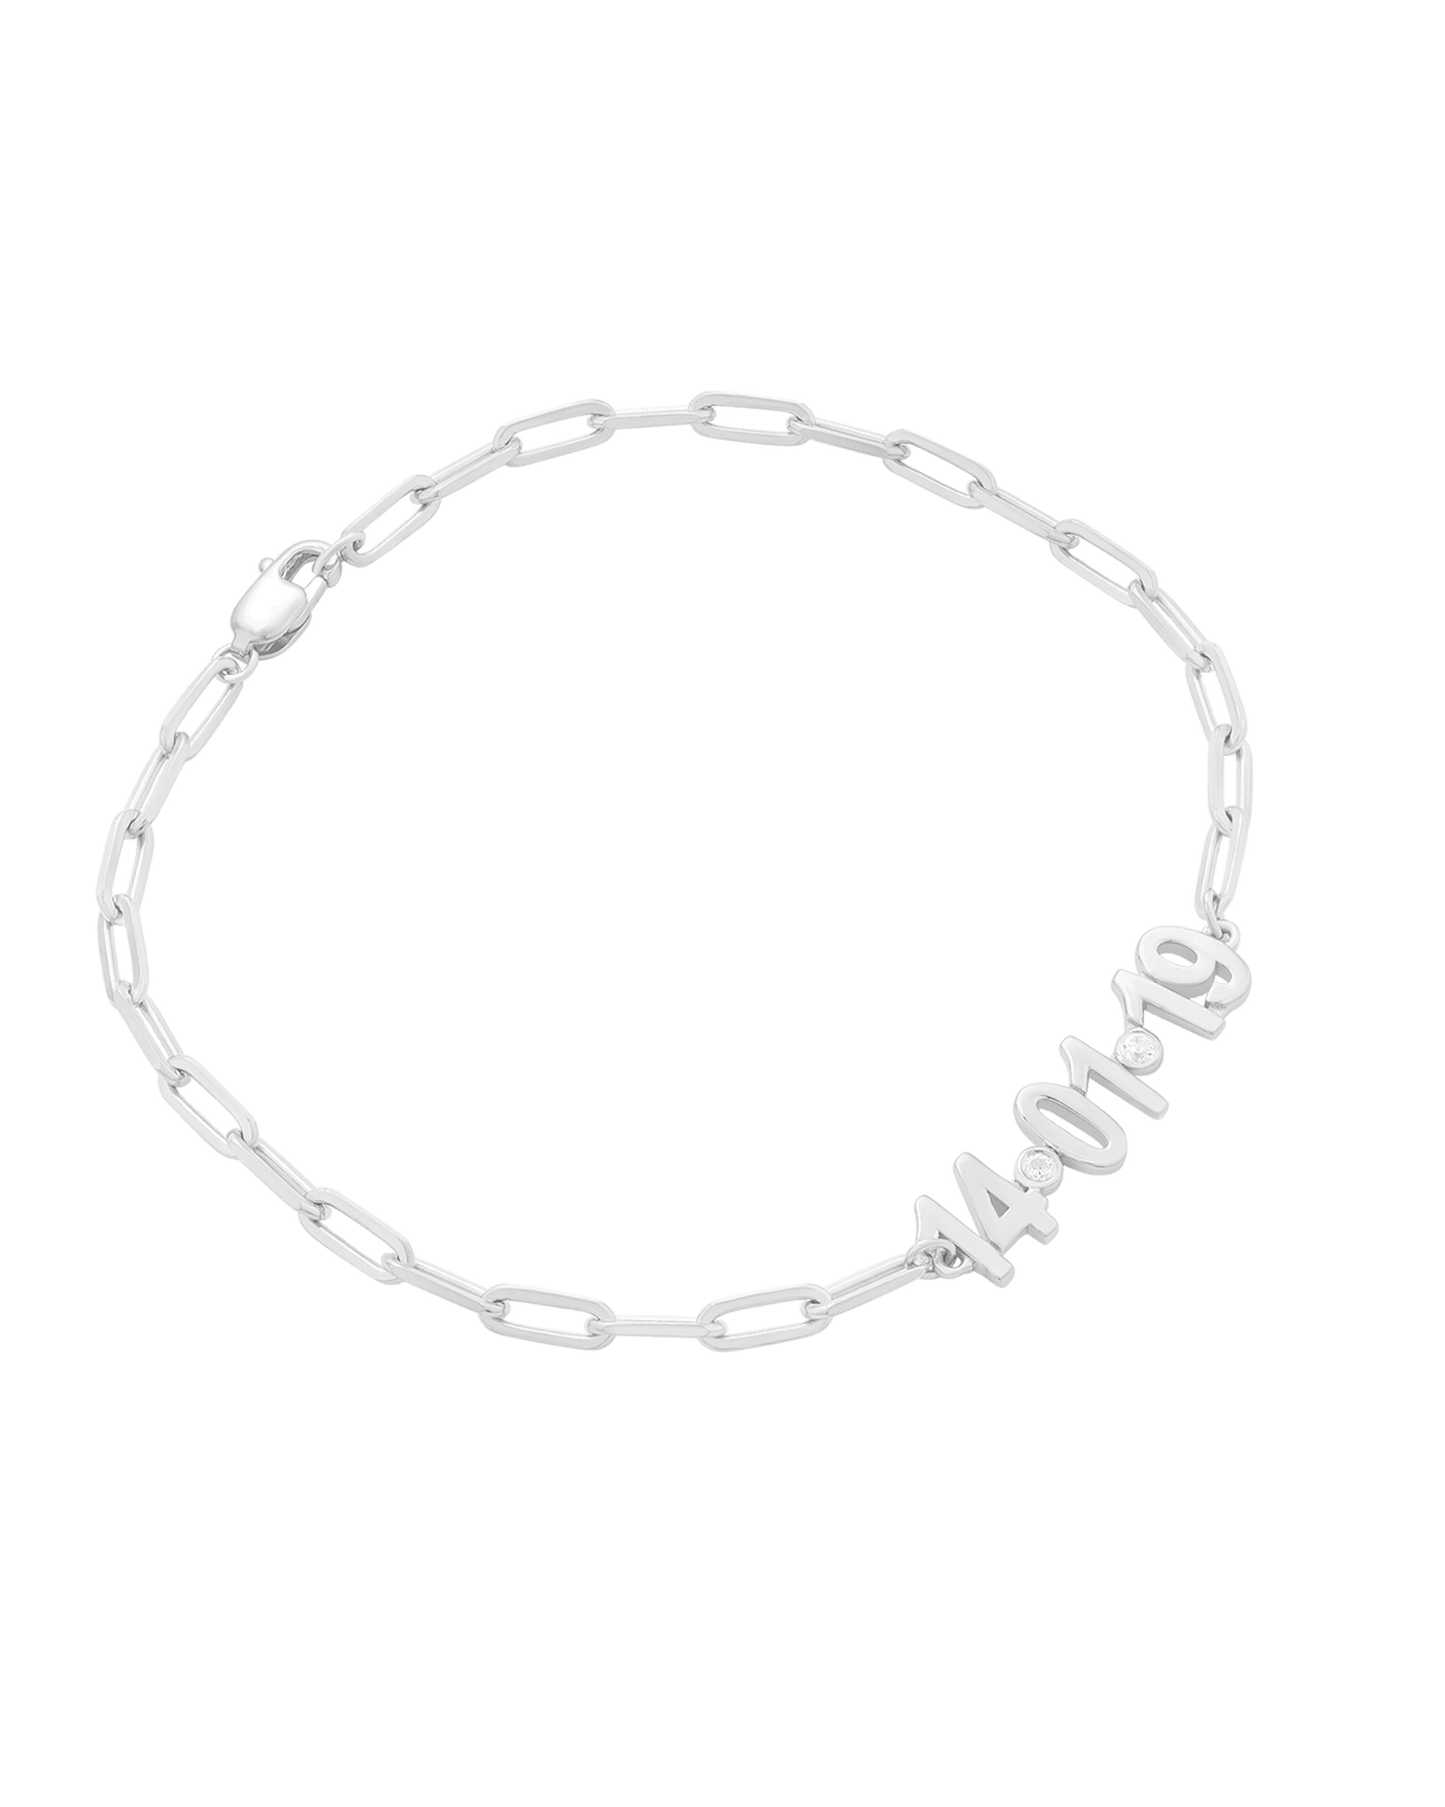 Birthdate Diamond Bracelet - 14K White Gold Bracelets magal-dev 6" 